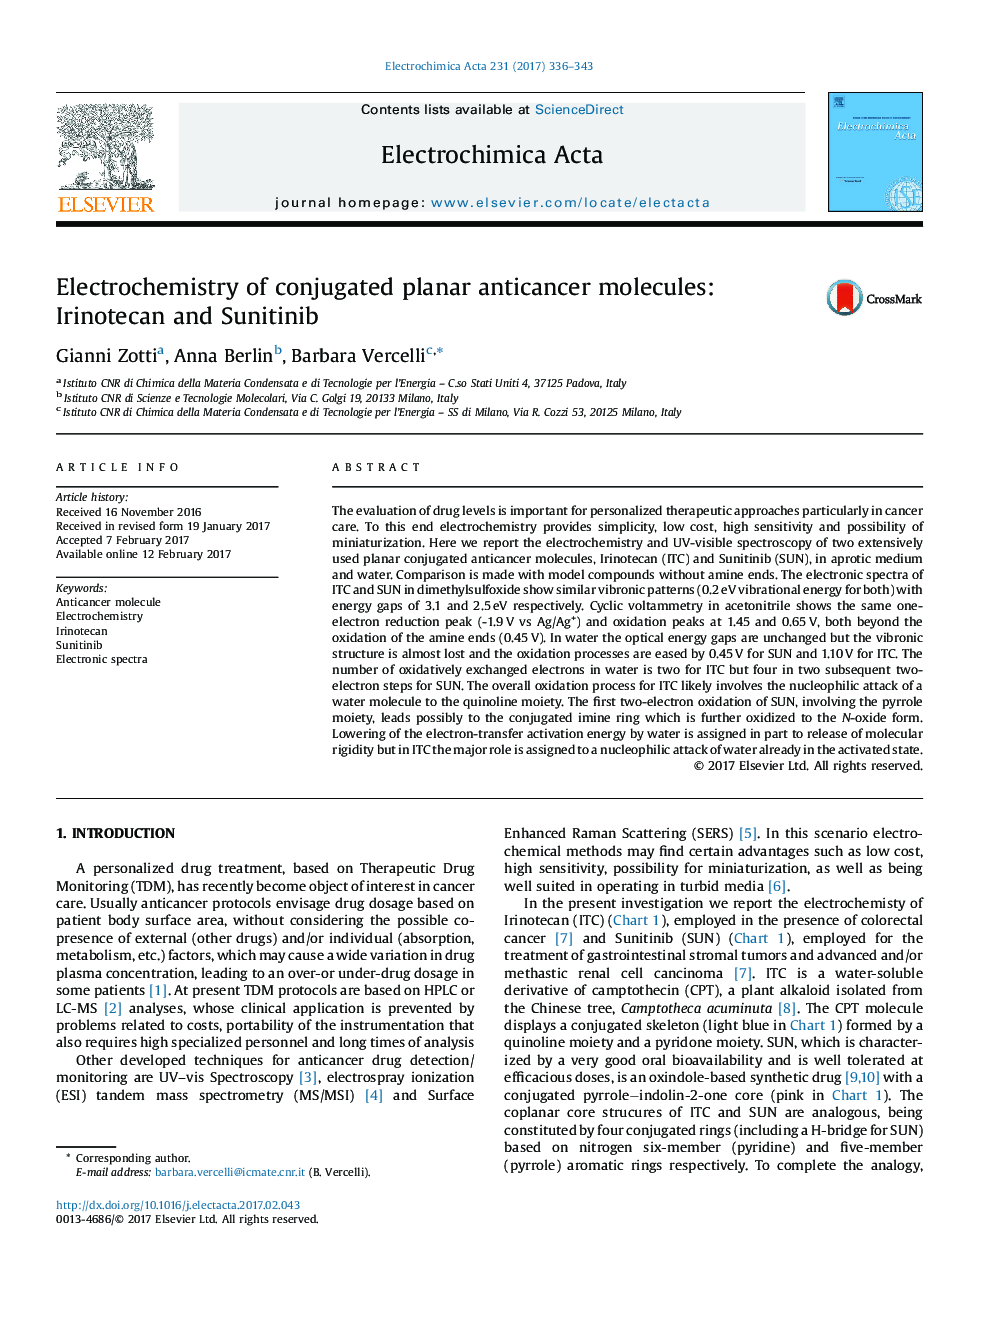 Electrochemistry of conjugated planar anticancer molecules: Irinotecan and Sunitinib